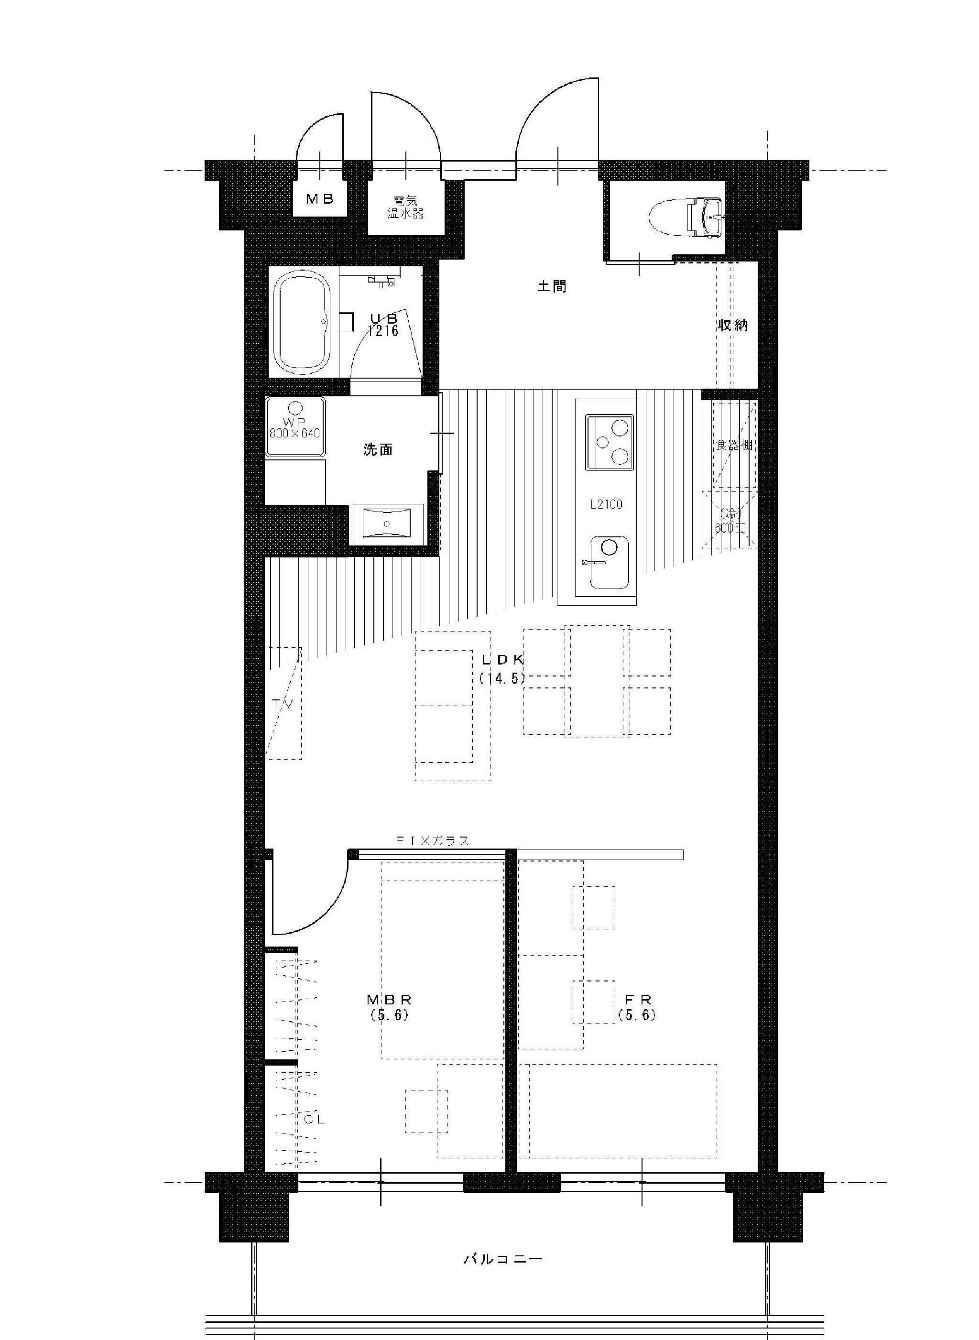 Floor plan. Floor Reference Example renovation plan view